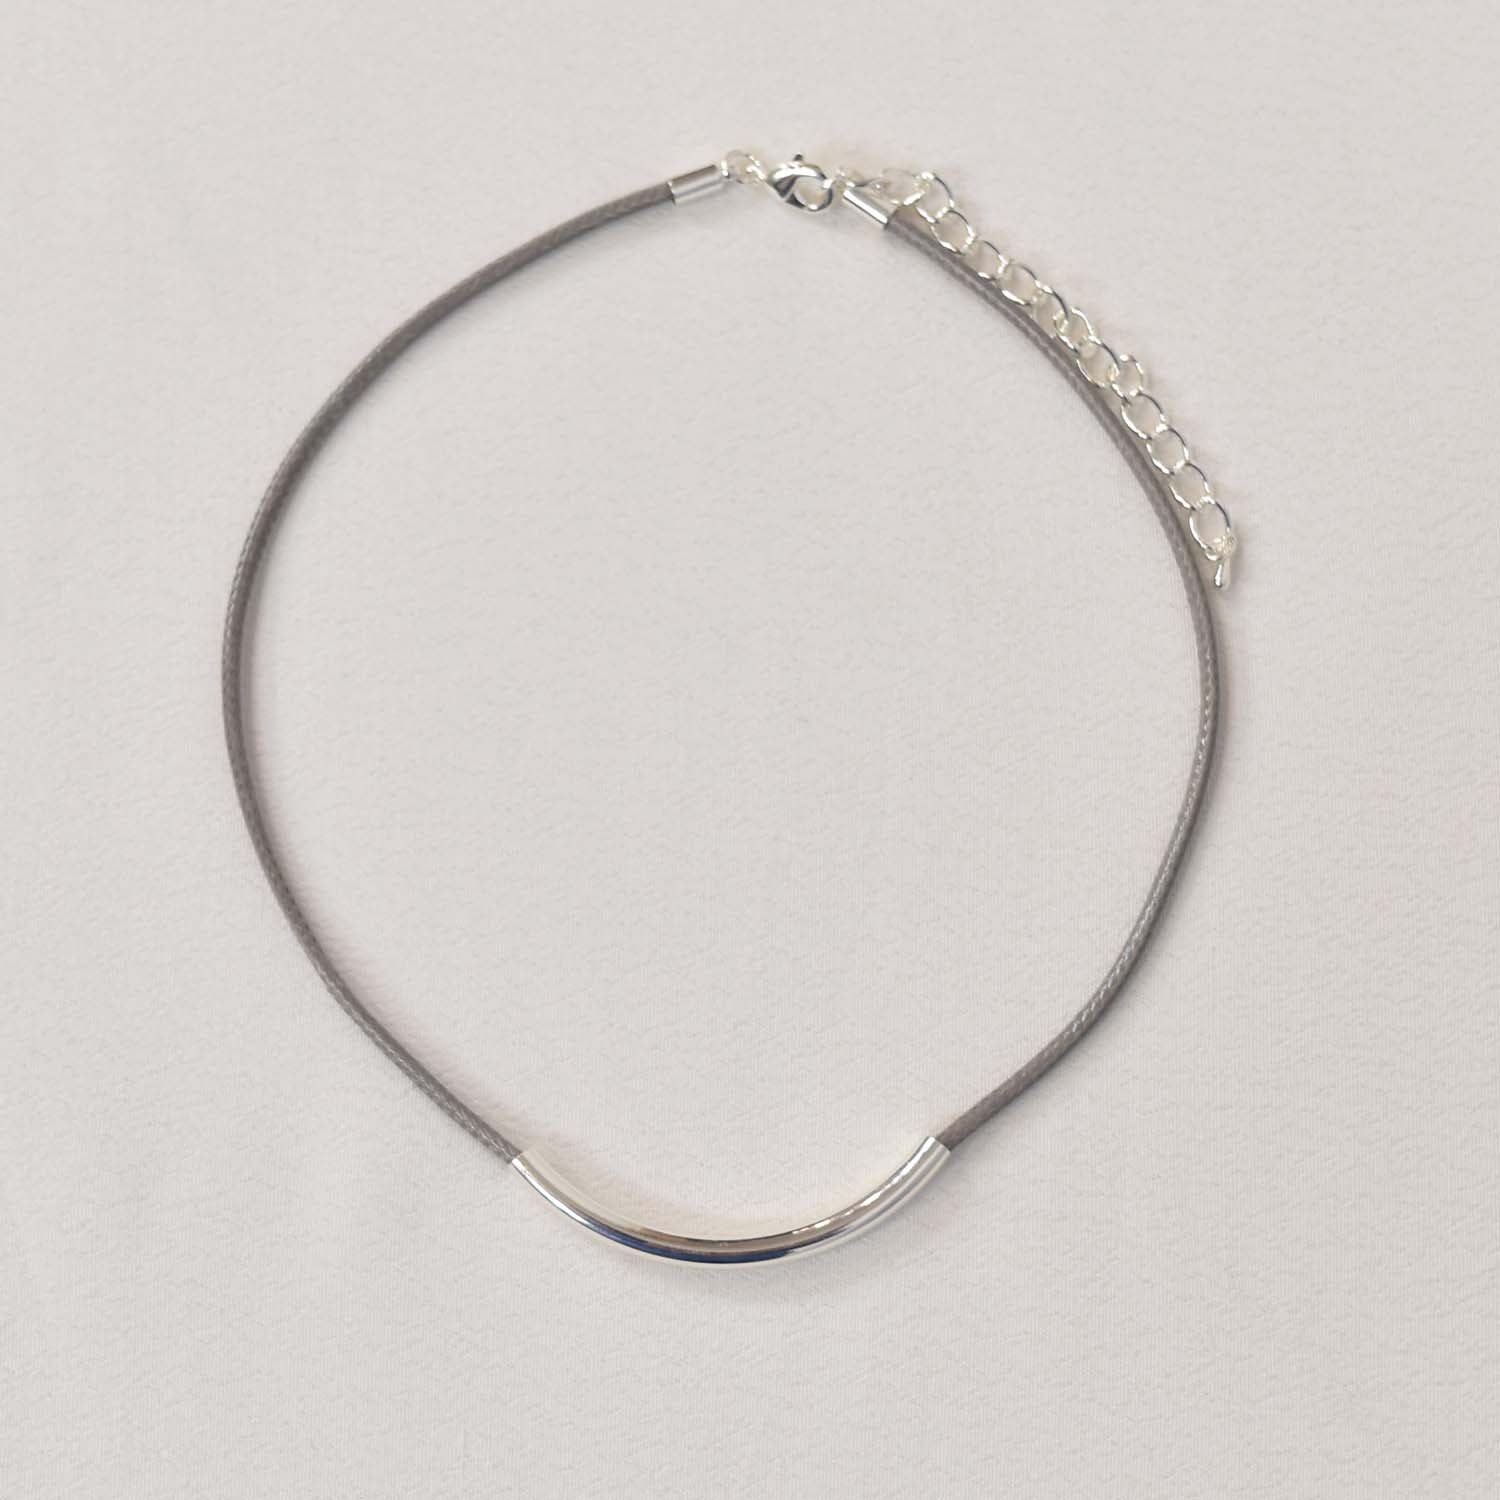 Waxed grey tube necklace
